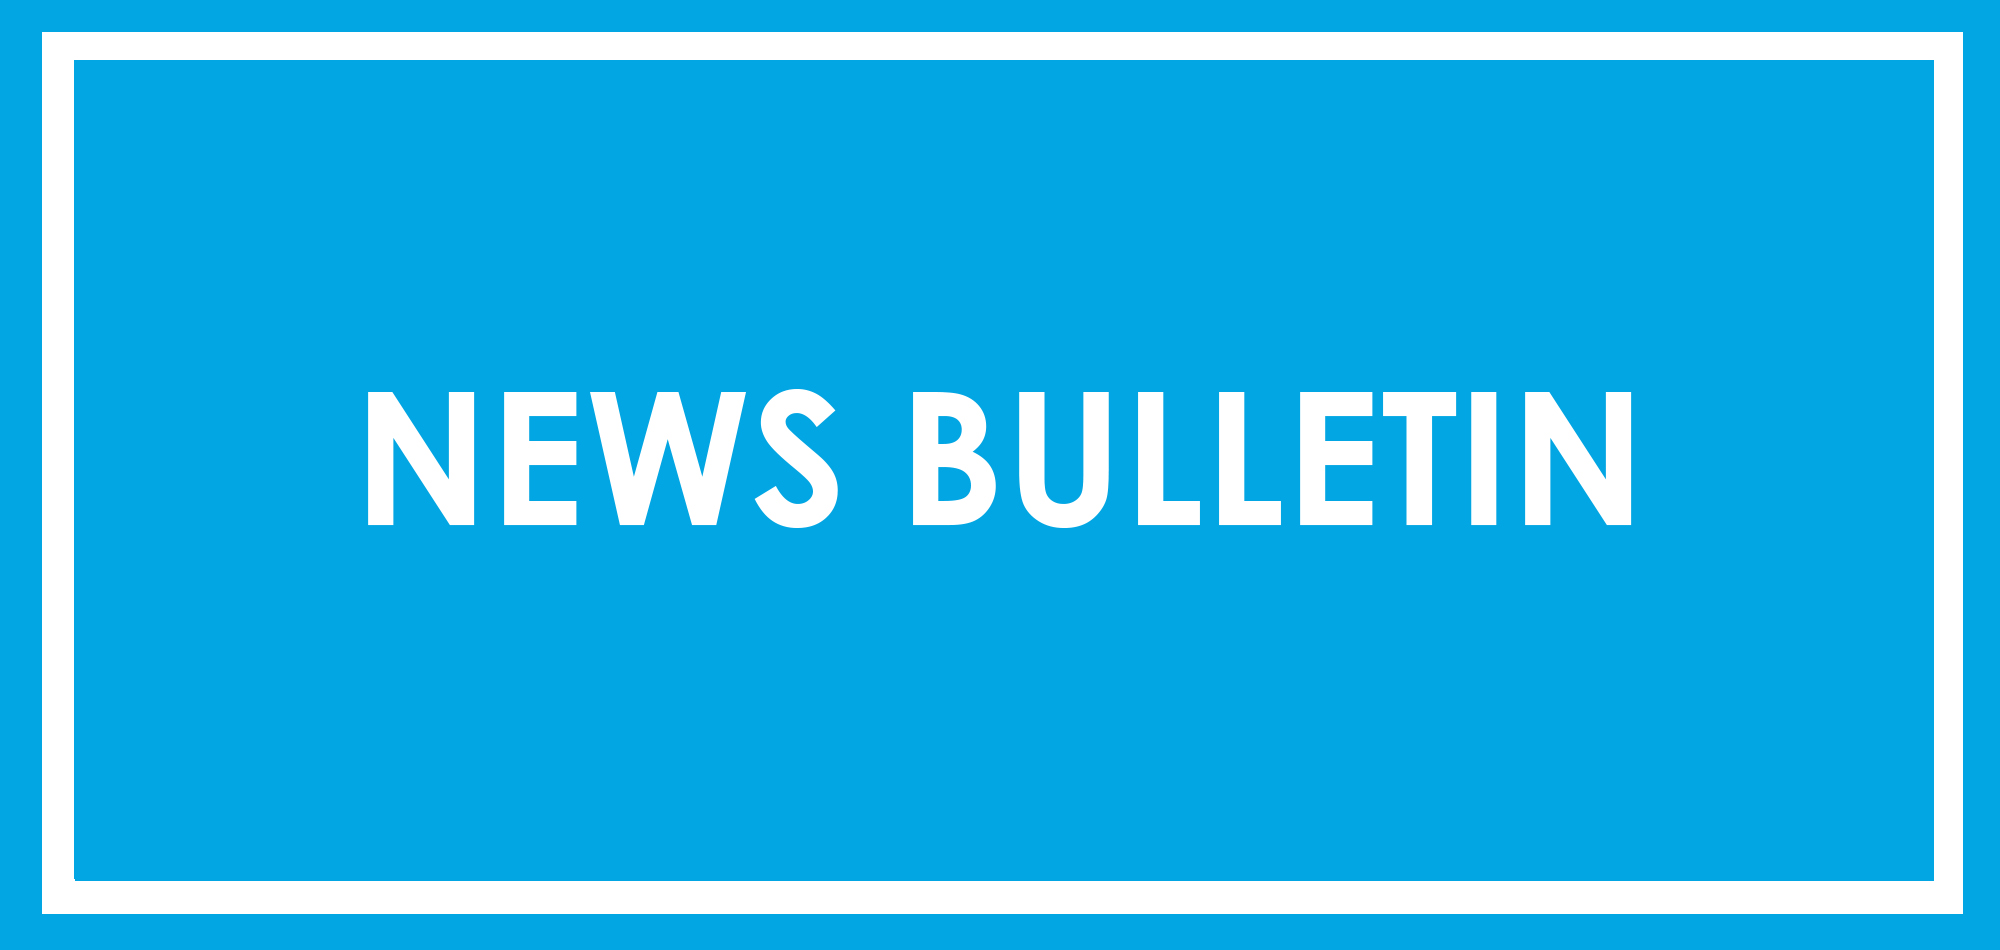 News Bulletin - 07.01.21